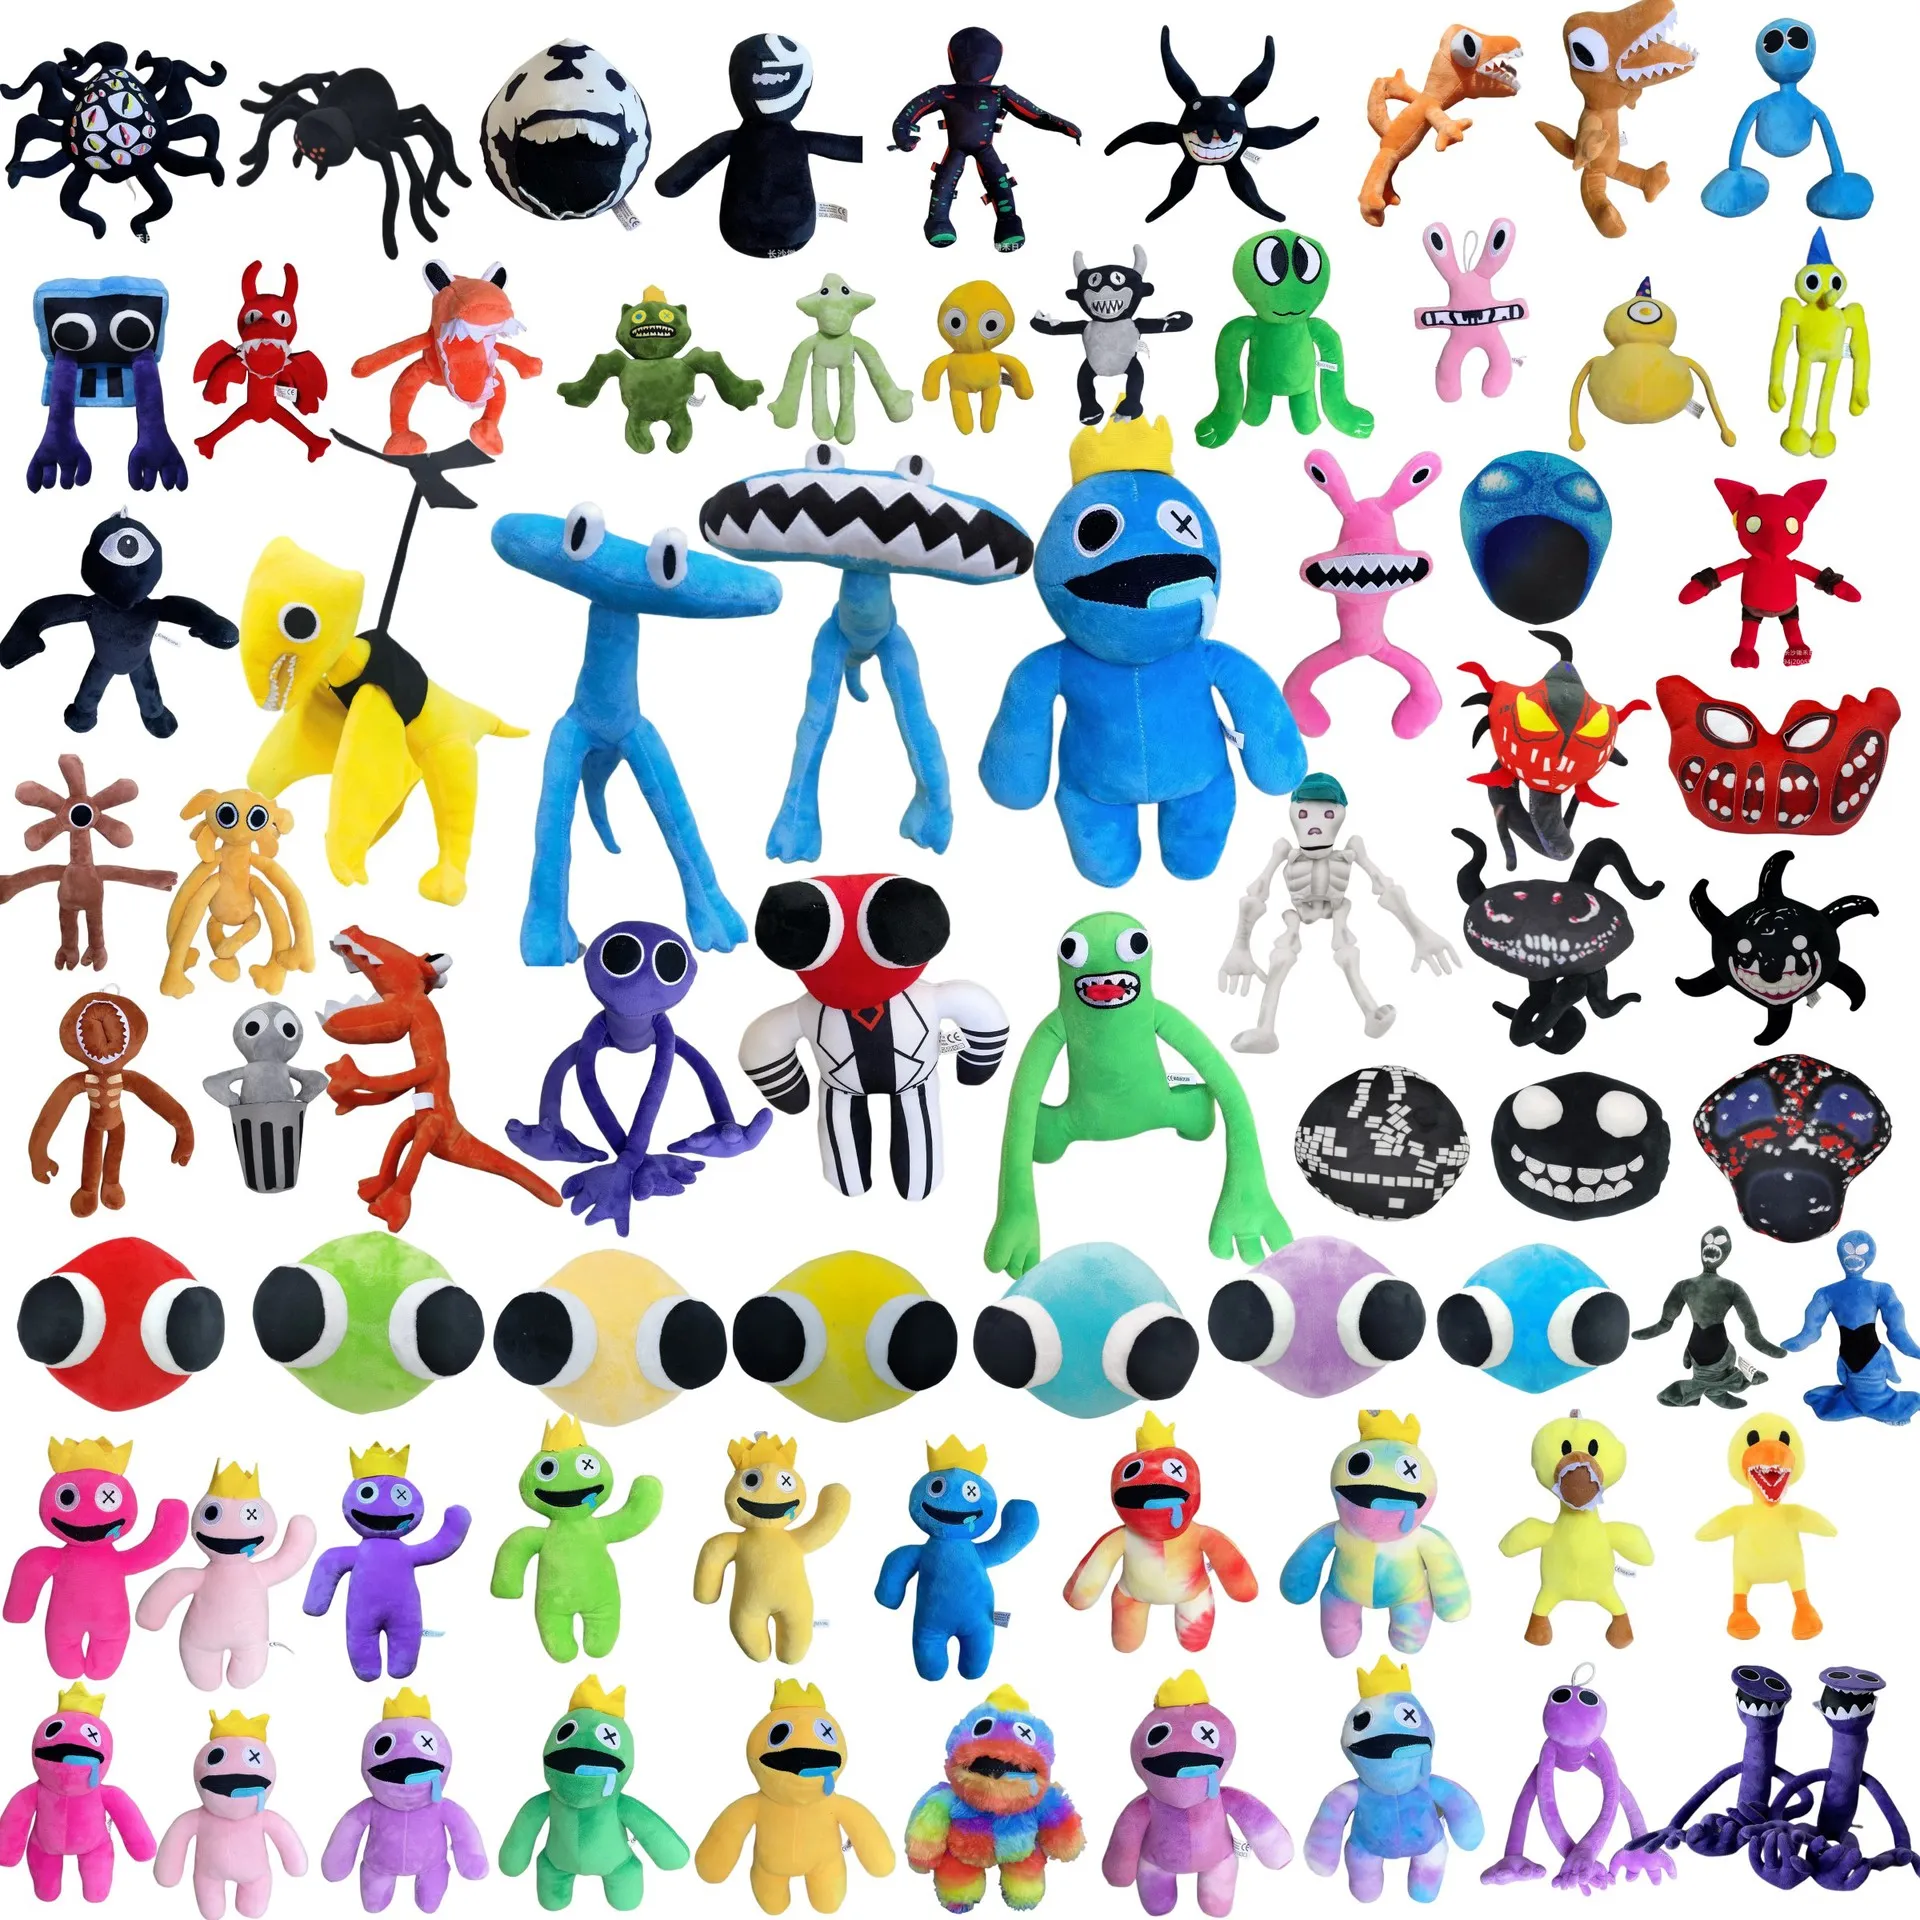 NEW 30cm Rainbow Friends Game Surrounding Plush Toy Cartoon Game